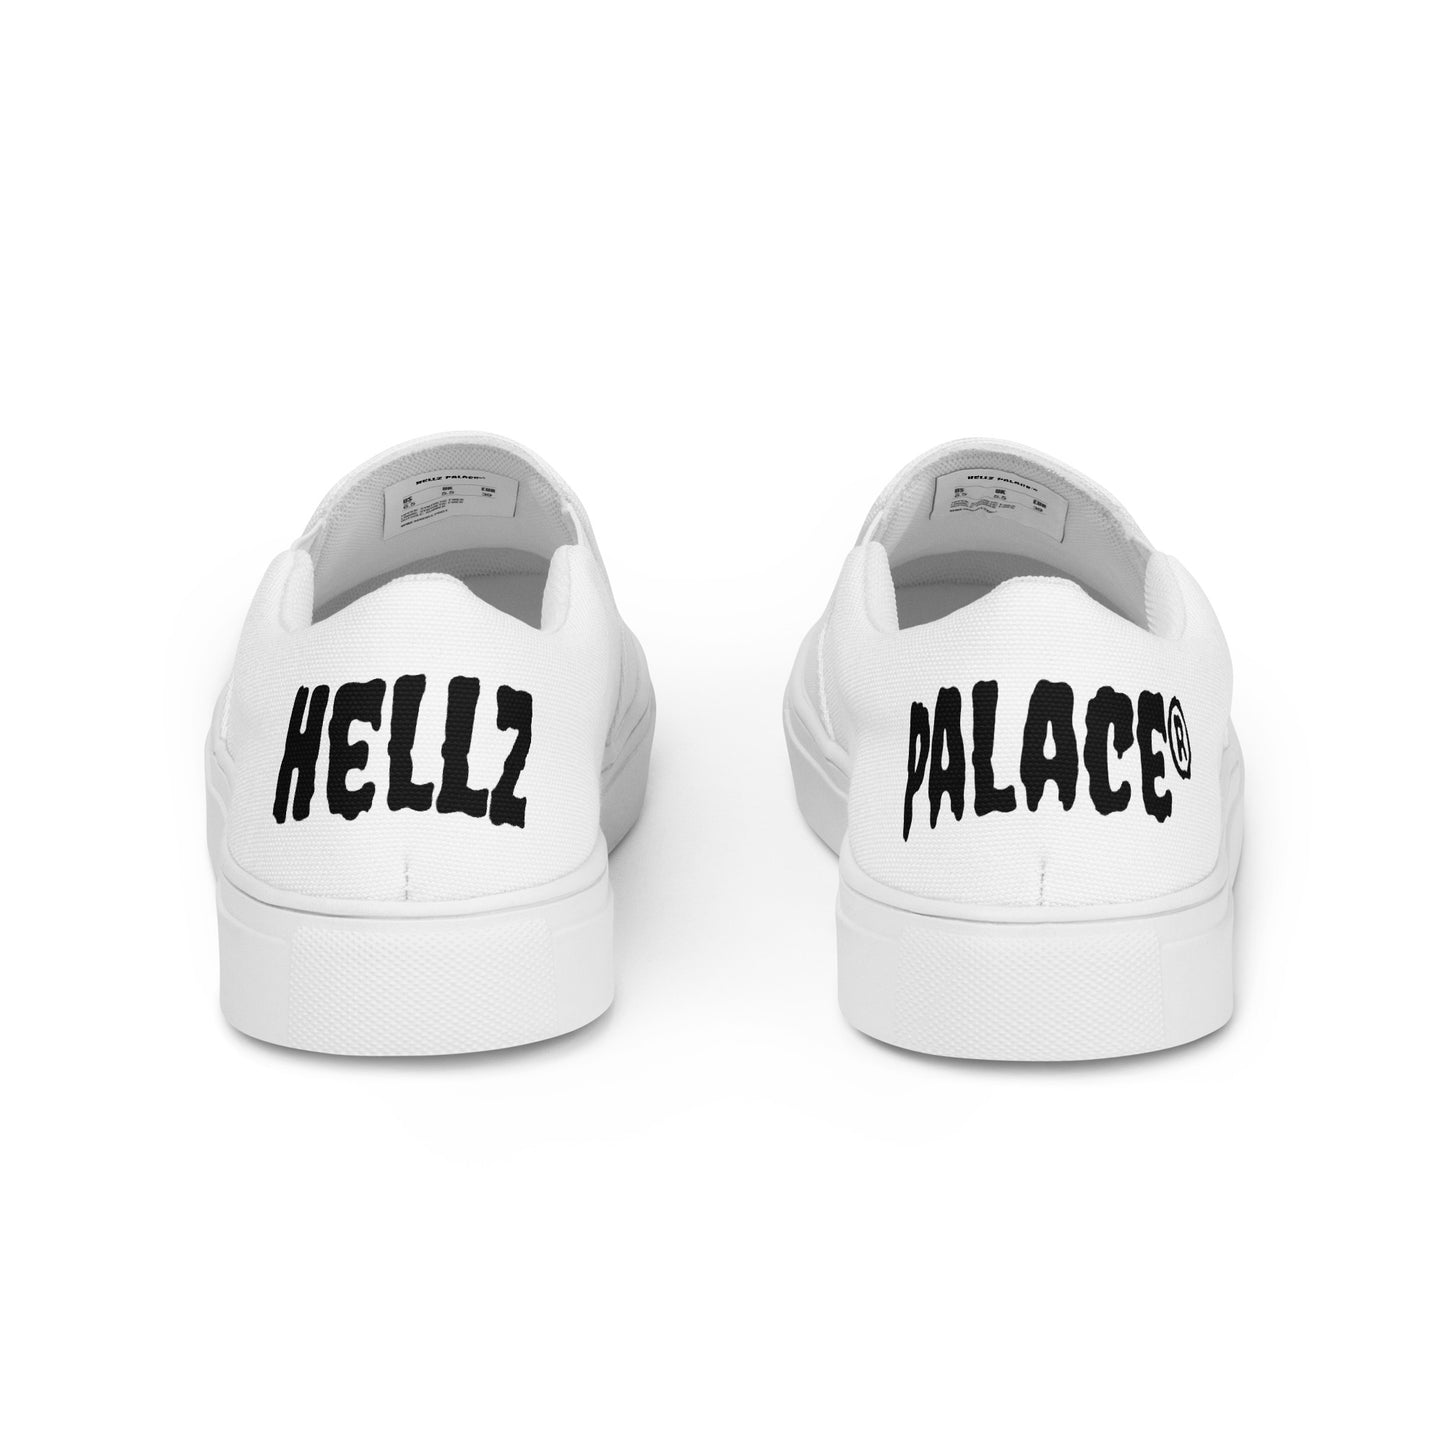 Hellz Palace® Brand Men’s slip-on canvas shoes